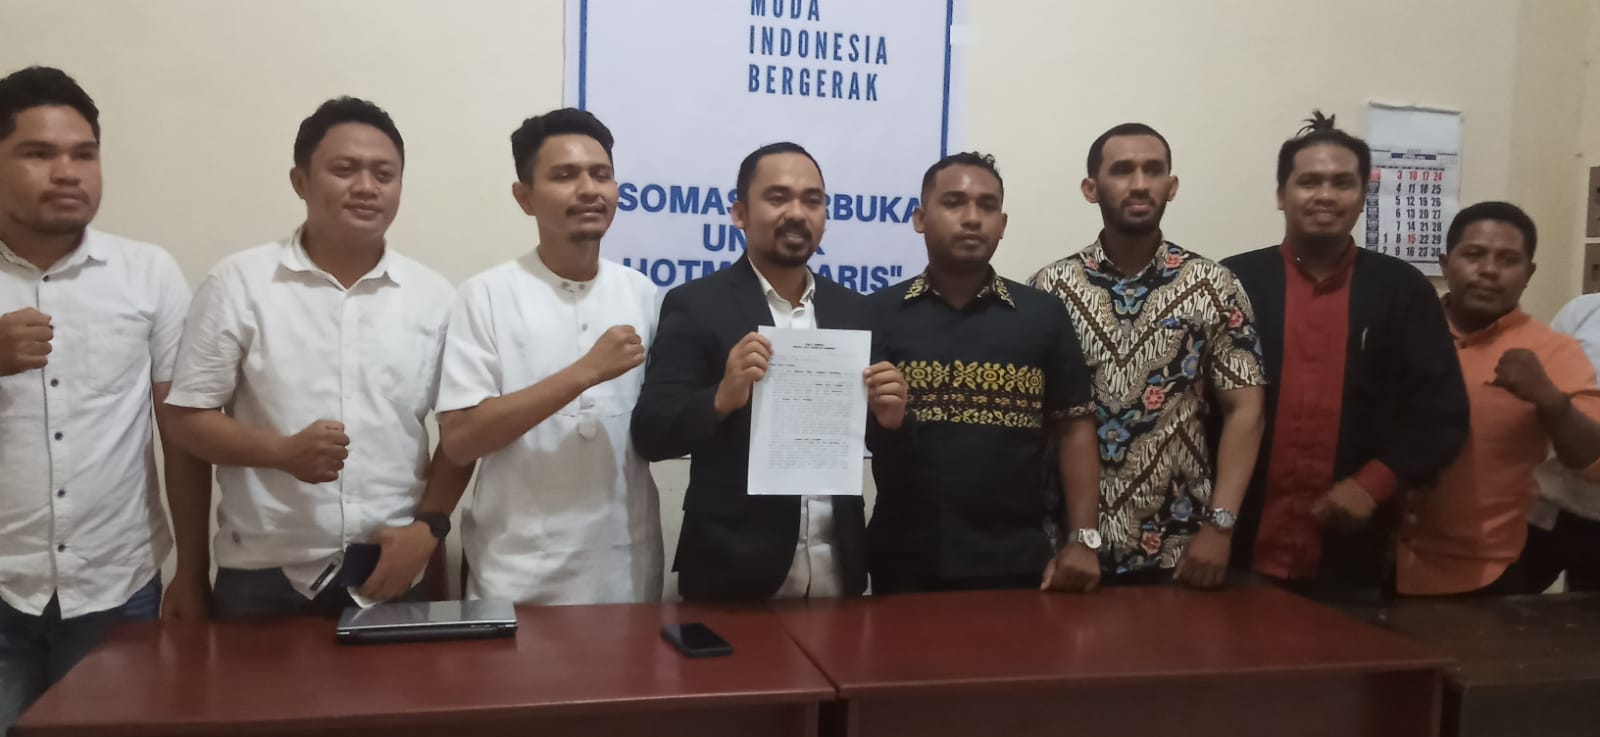 Advokat muda bergerak di Maluku